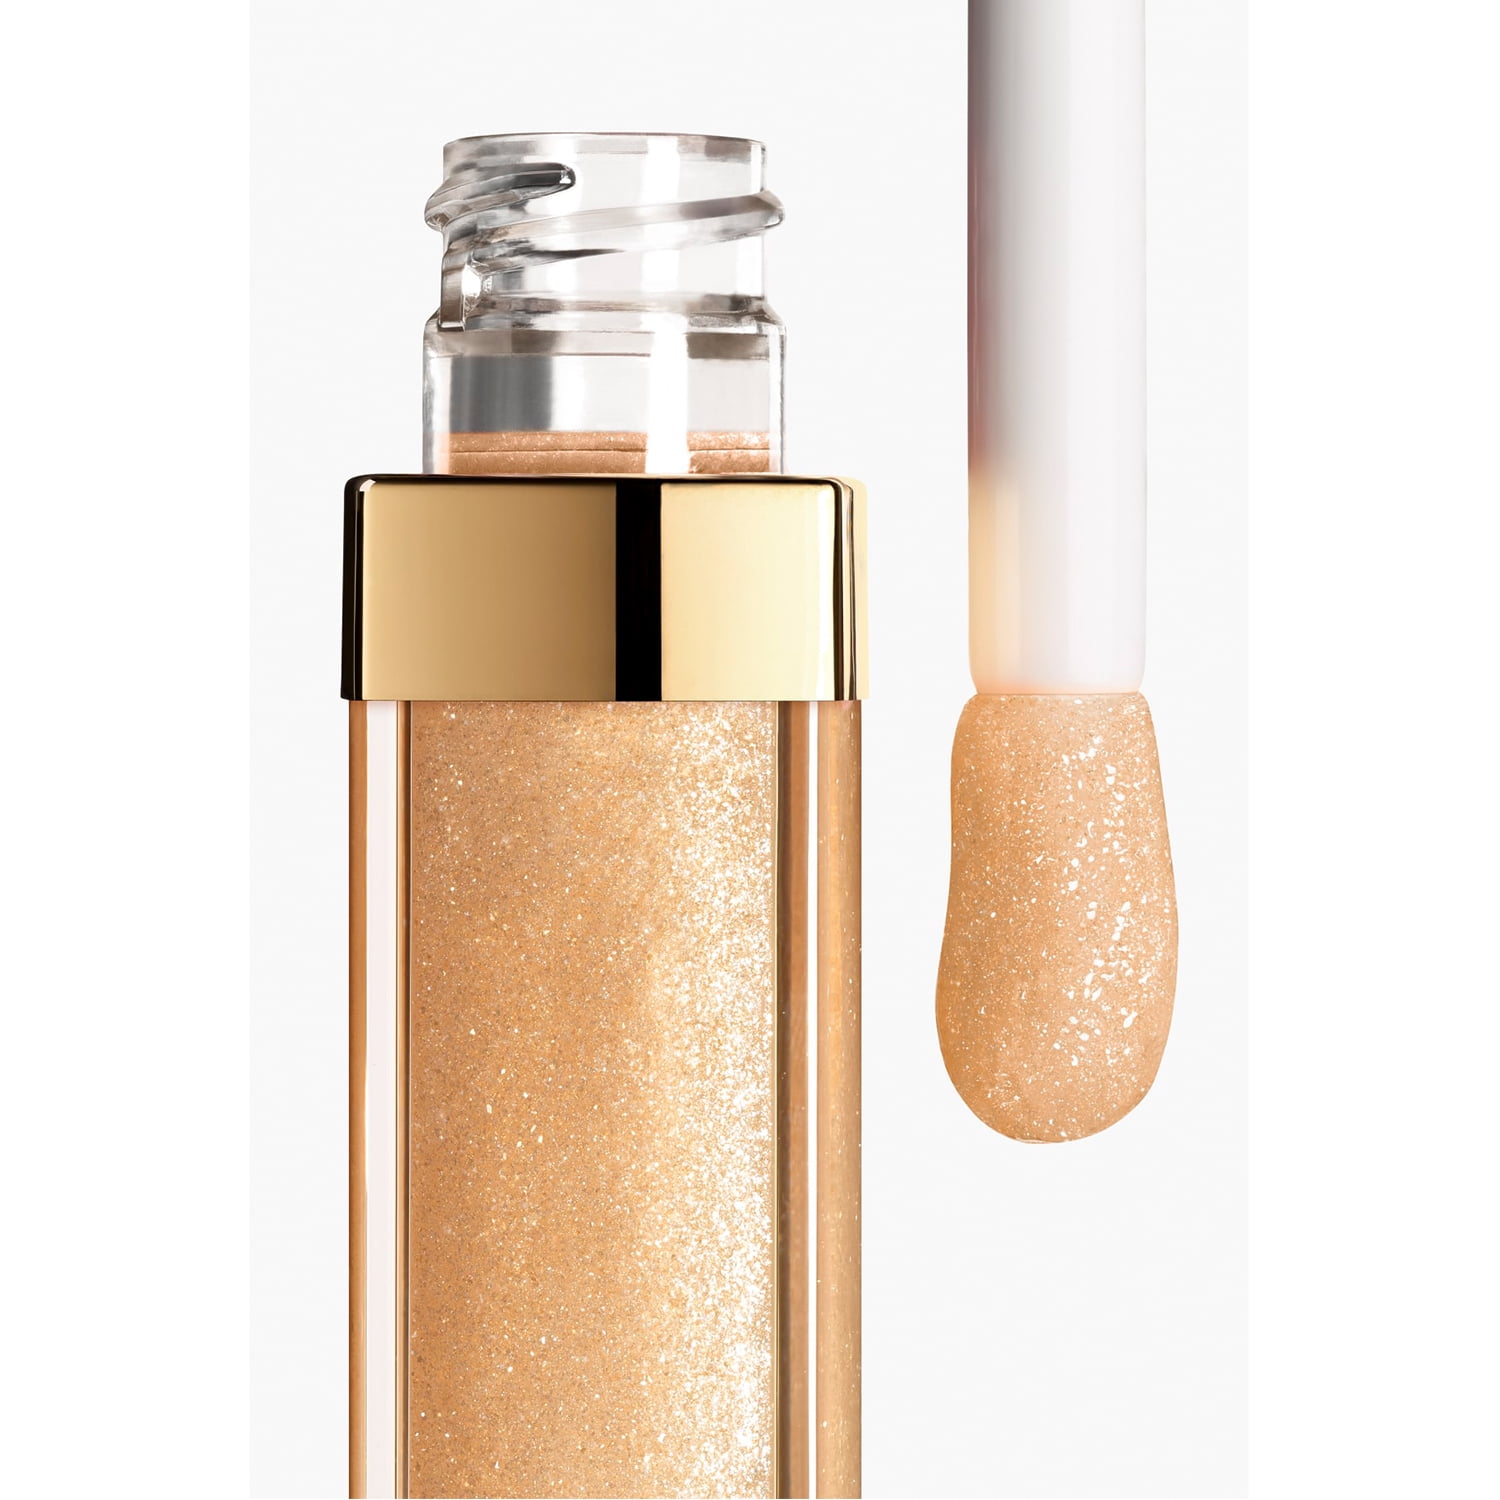 Chanel Rouge Coco Lip Gloss Illuminating Top Coat #774 Excitation - 0.19 oz